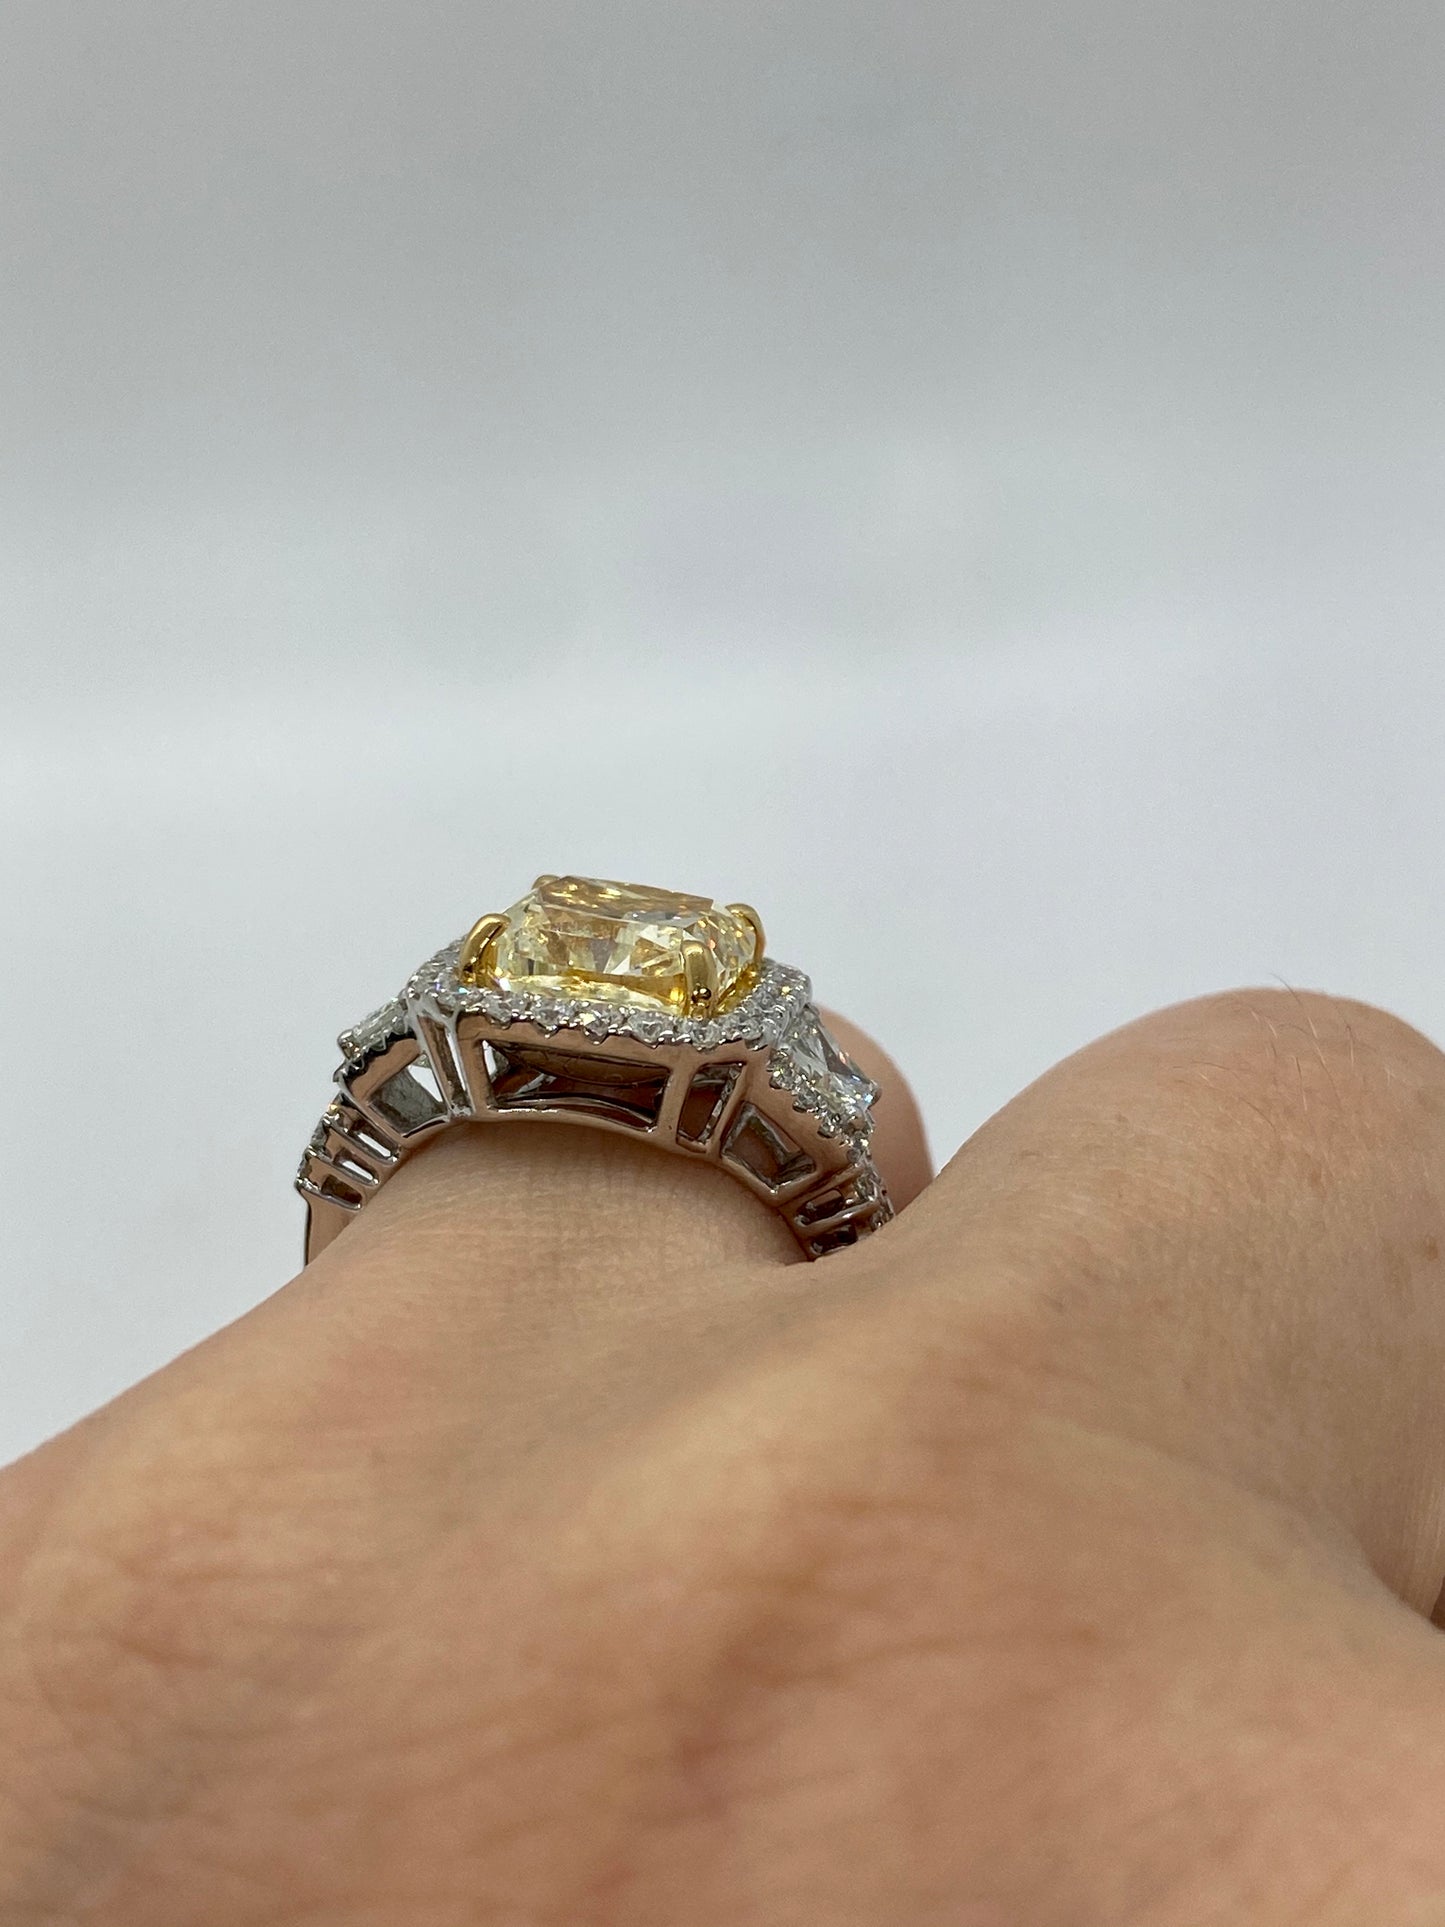 Yellow Diamond Ring R22758